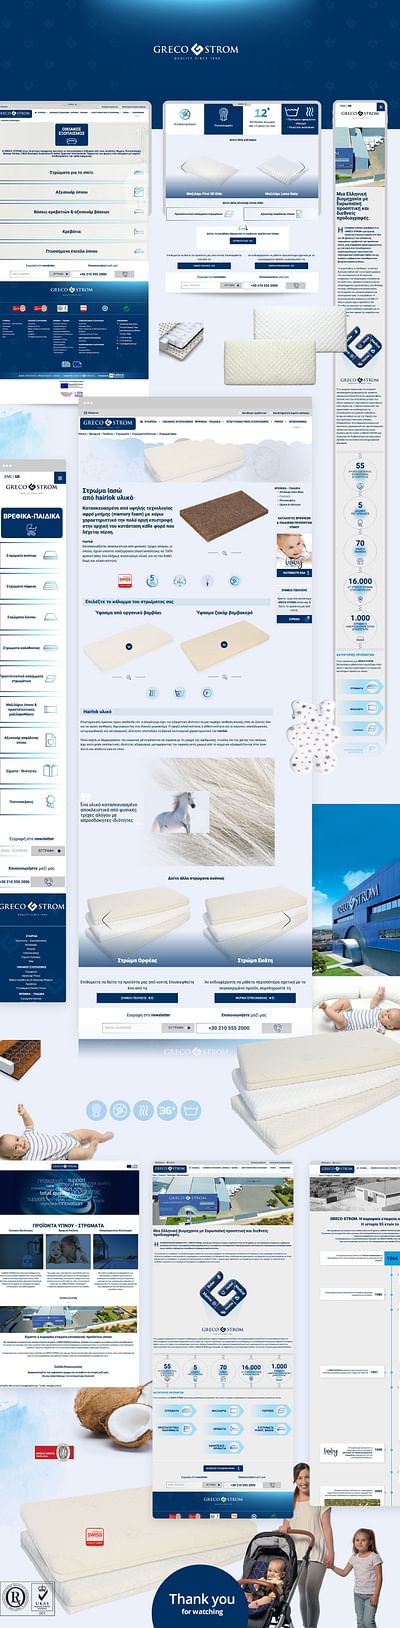 GRECO STROM Sleep mattresses - Stratégie digitale